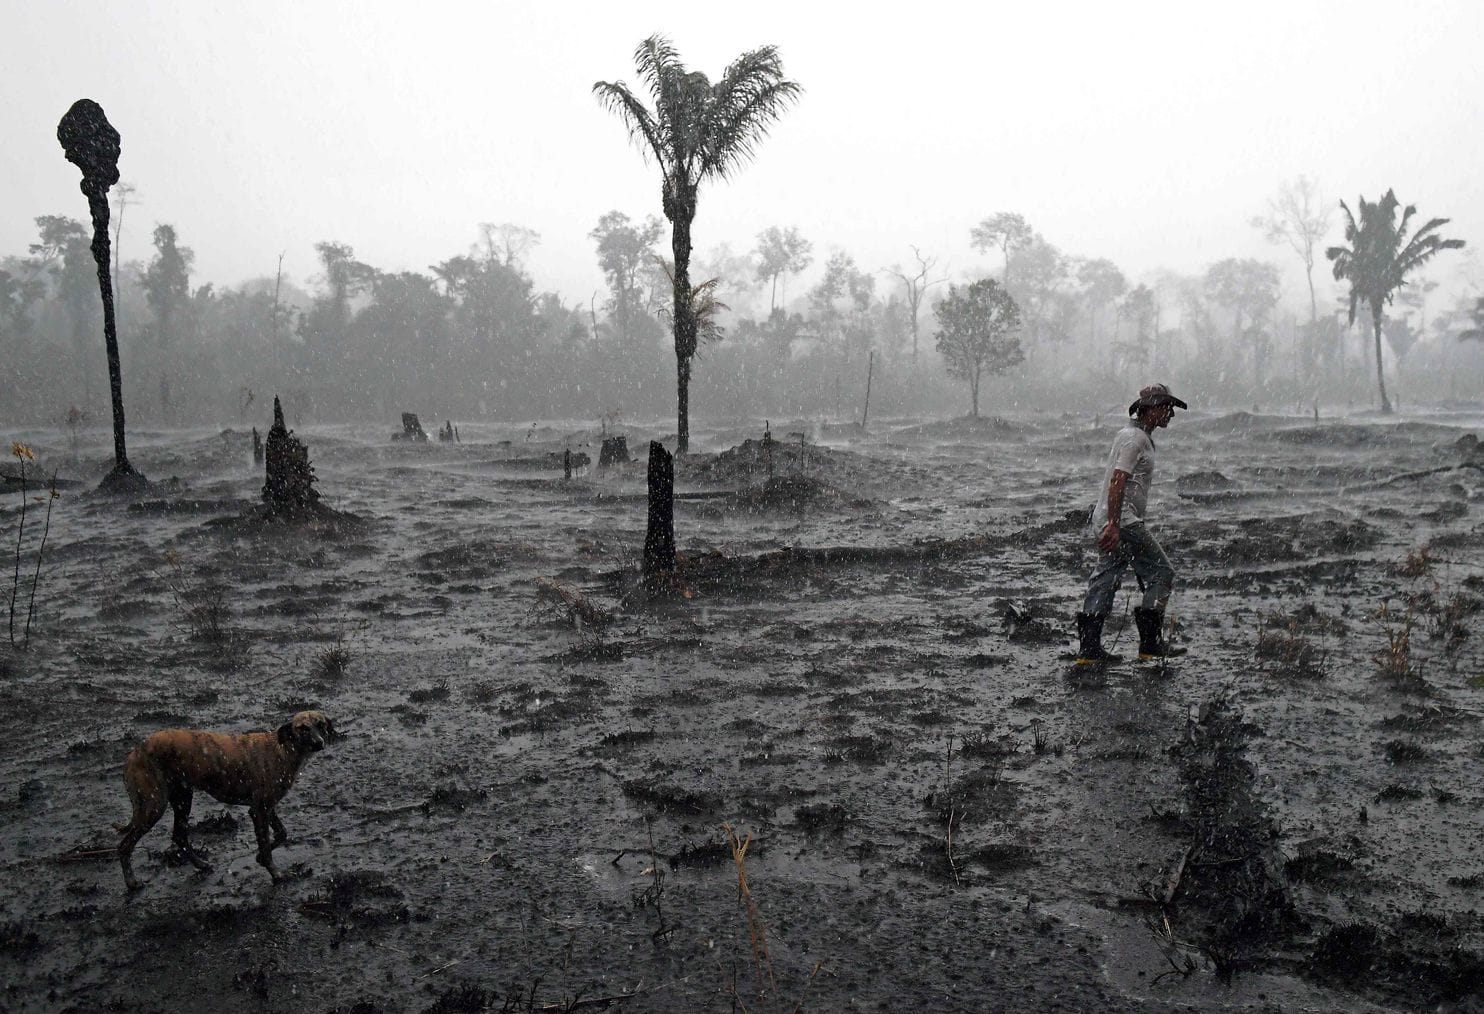 Brazilian farmer Helio Lombardo Do Santos and a dog walk through a burned area of the Amazon rainforest, near Porto Velho, Rondônia state on 26 August 2019. Photo: Carl De Souza / AFP / Getty Images